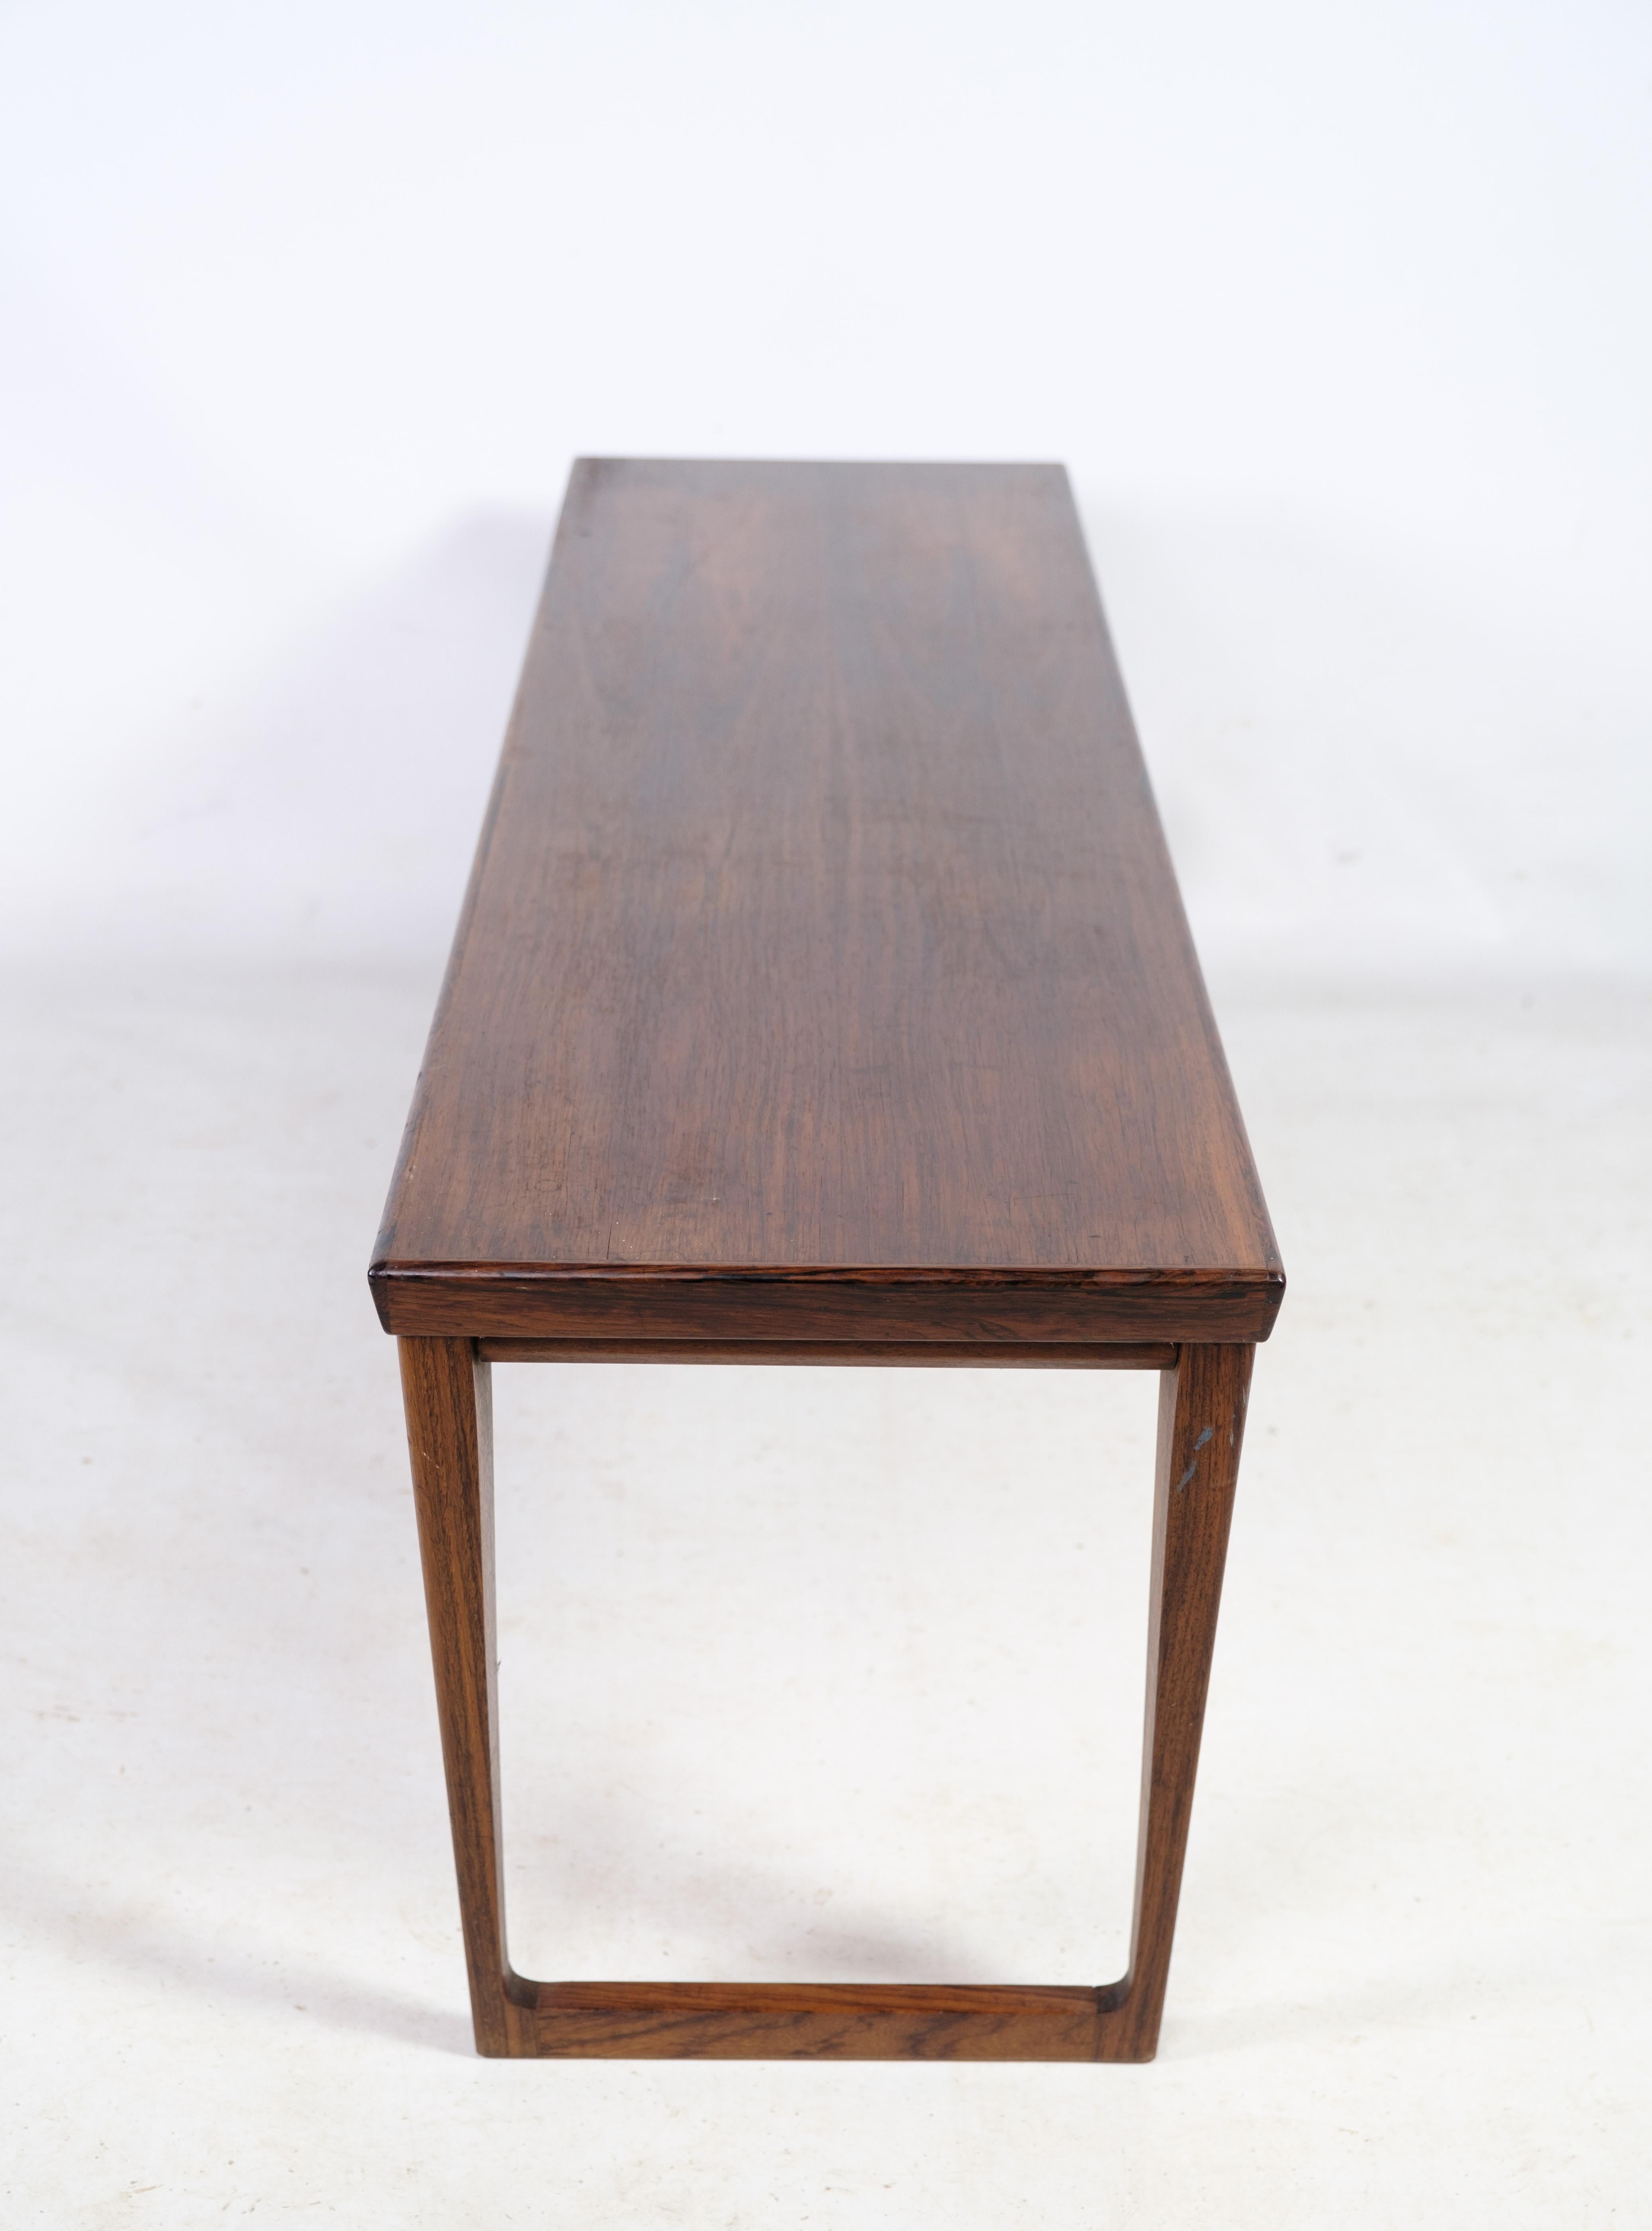 Palisander Side Table, Model No. 36, Designed by Kai Kristiansen, Aksel Kjersgaard, Denmark